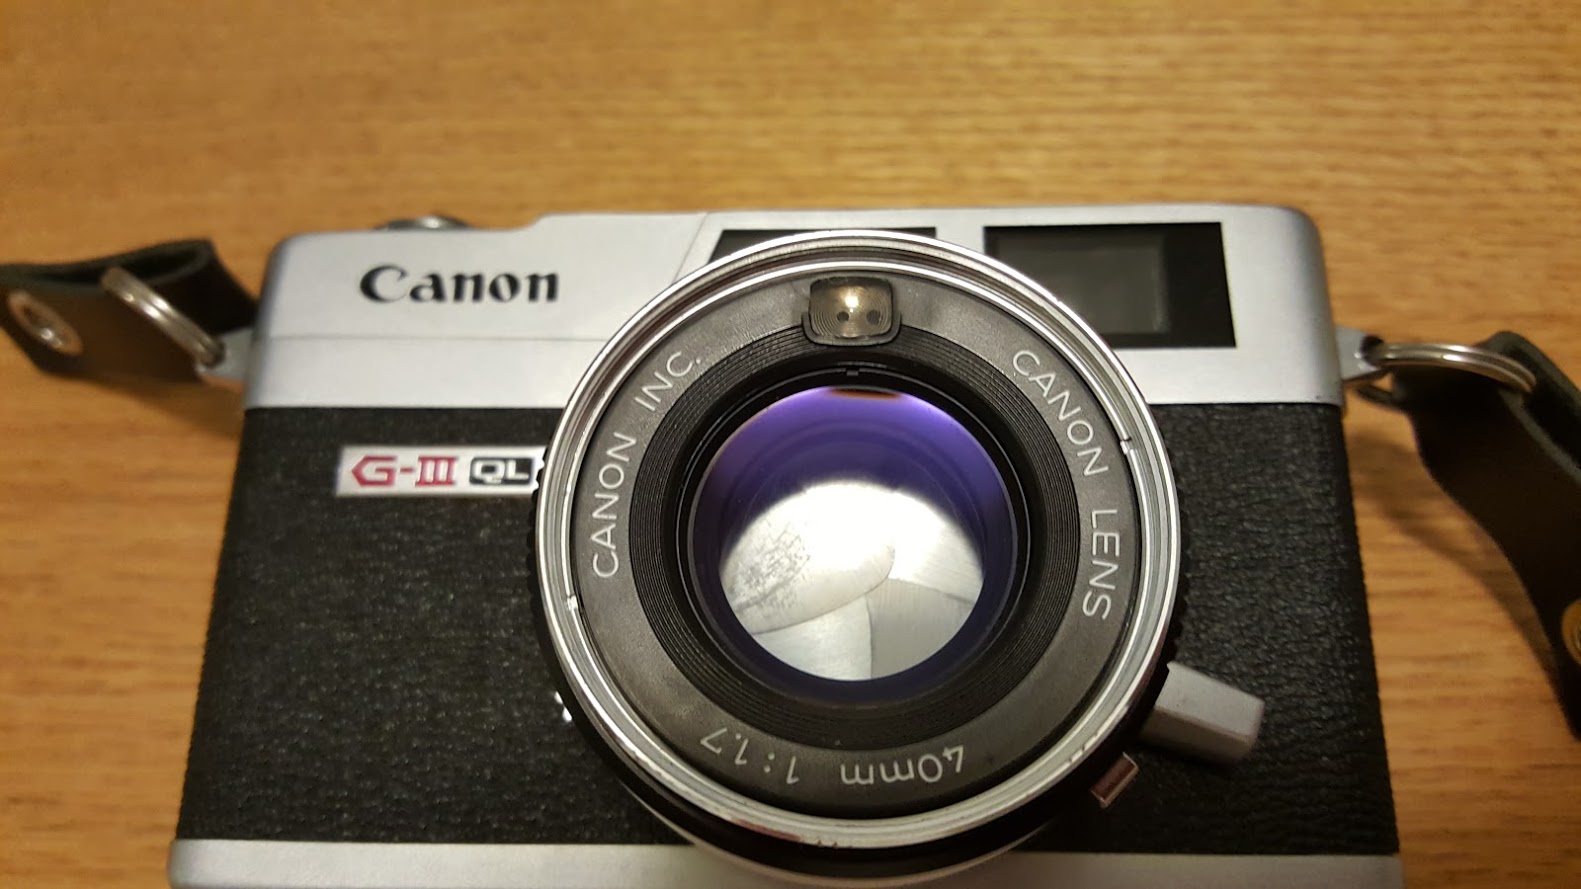 Canon Canonet QL17 G-III 40mm #4269065